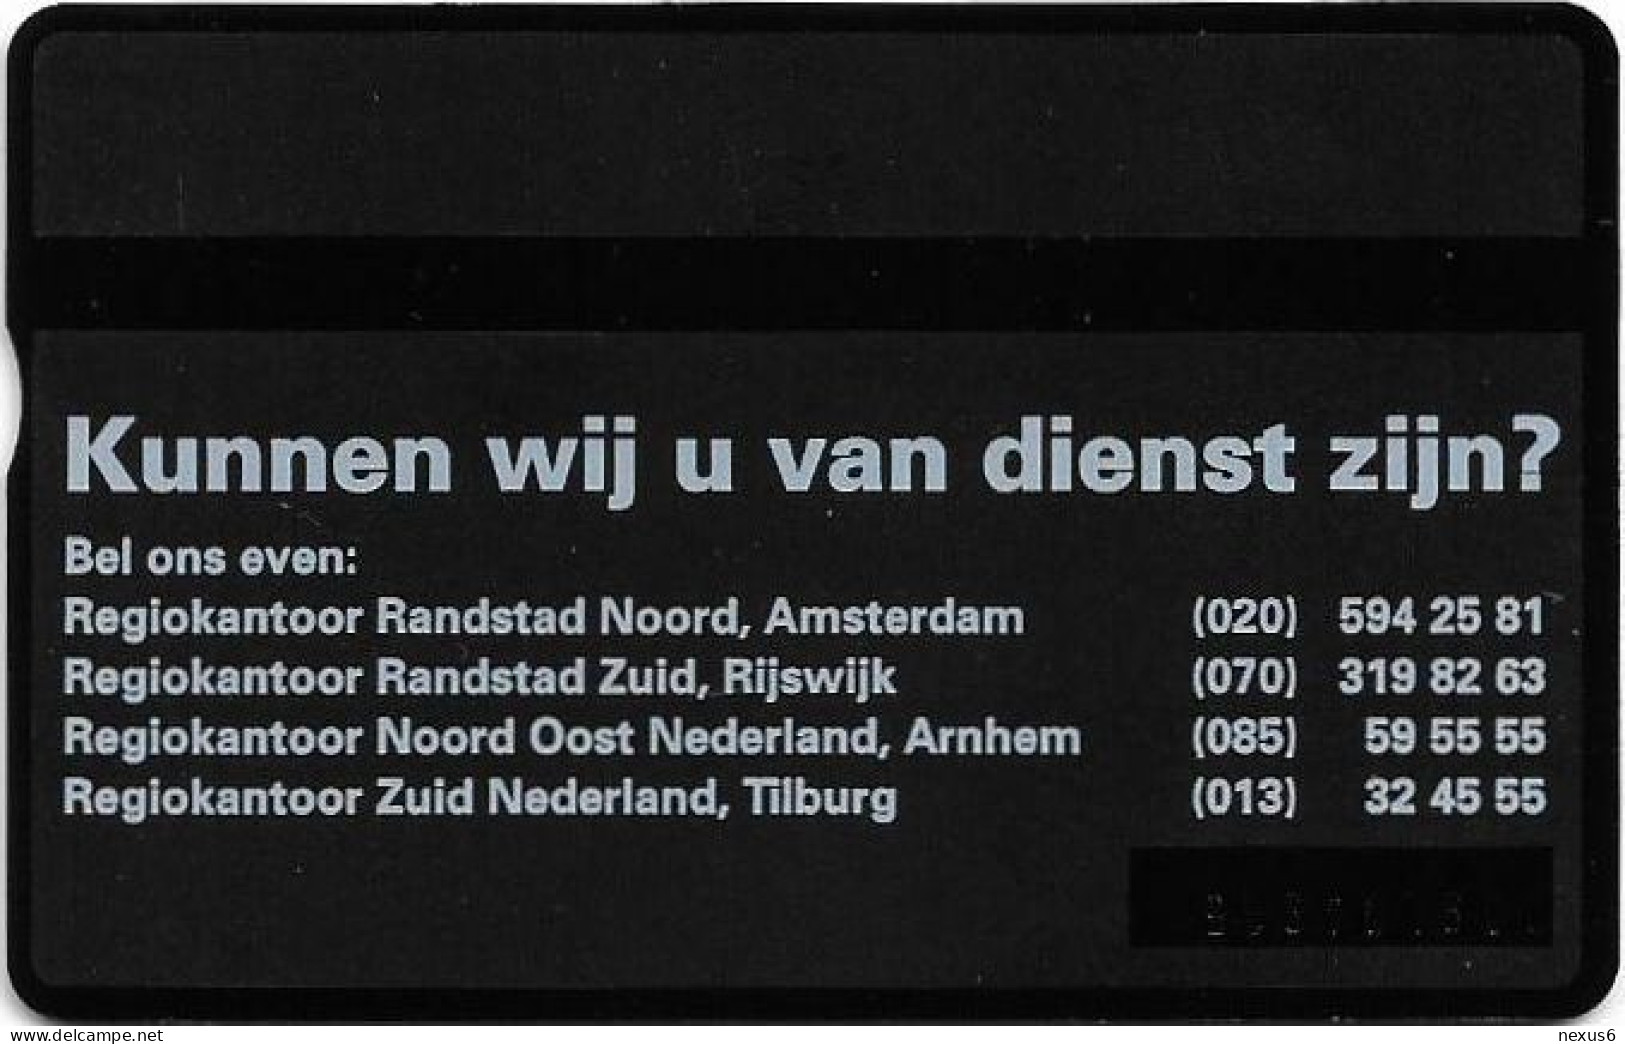 Netherlands - KPN - L&G - R034 - Delta Lloyd Leven Op Weg Naar Perfectie, Train - 209L - 09.1992, 4Units, 5.000ex, Mint - Privadas